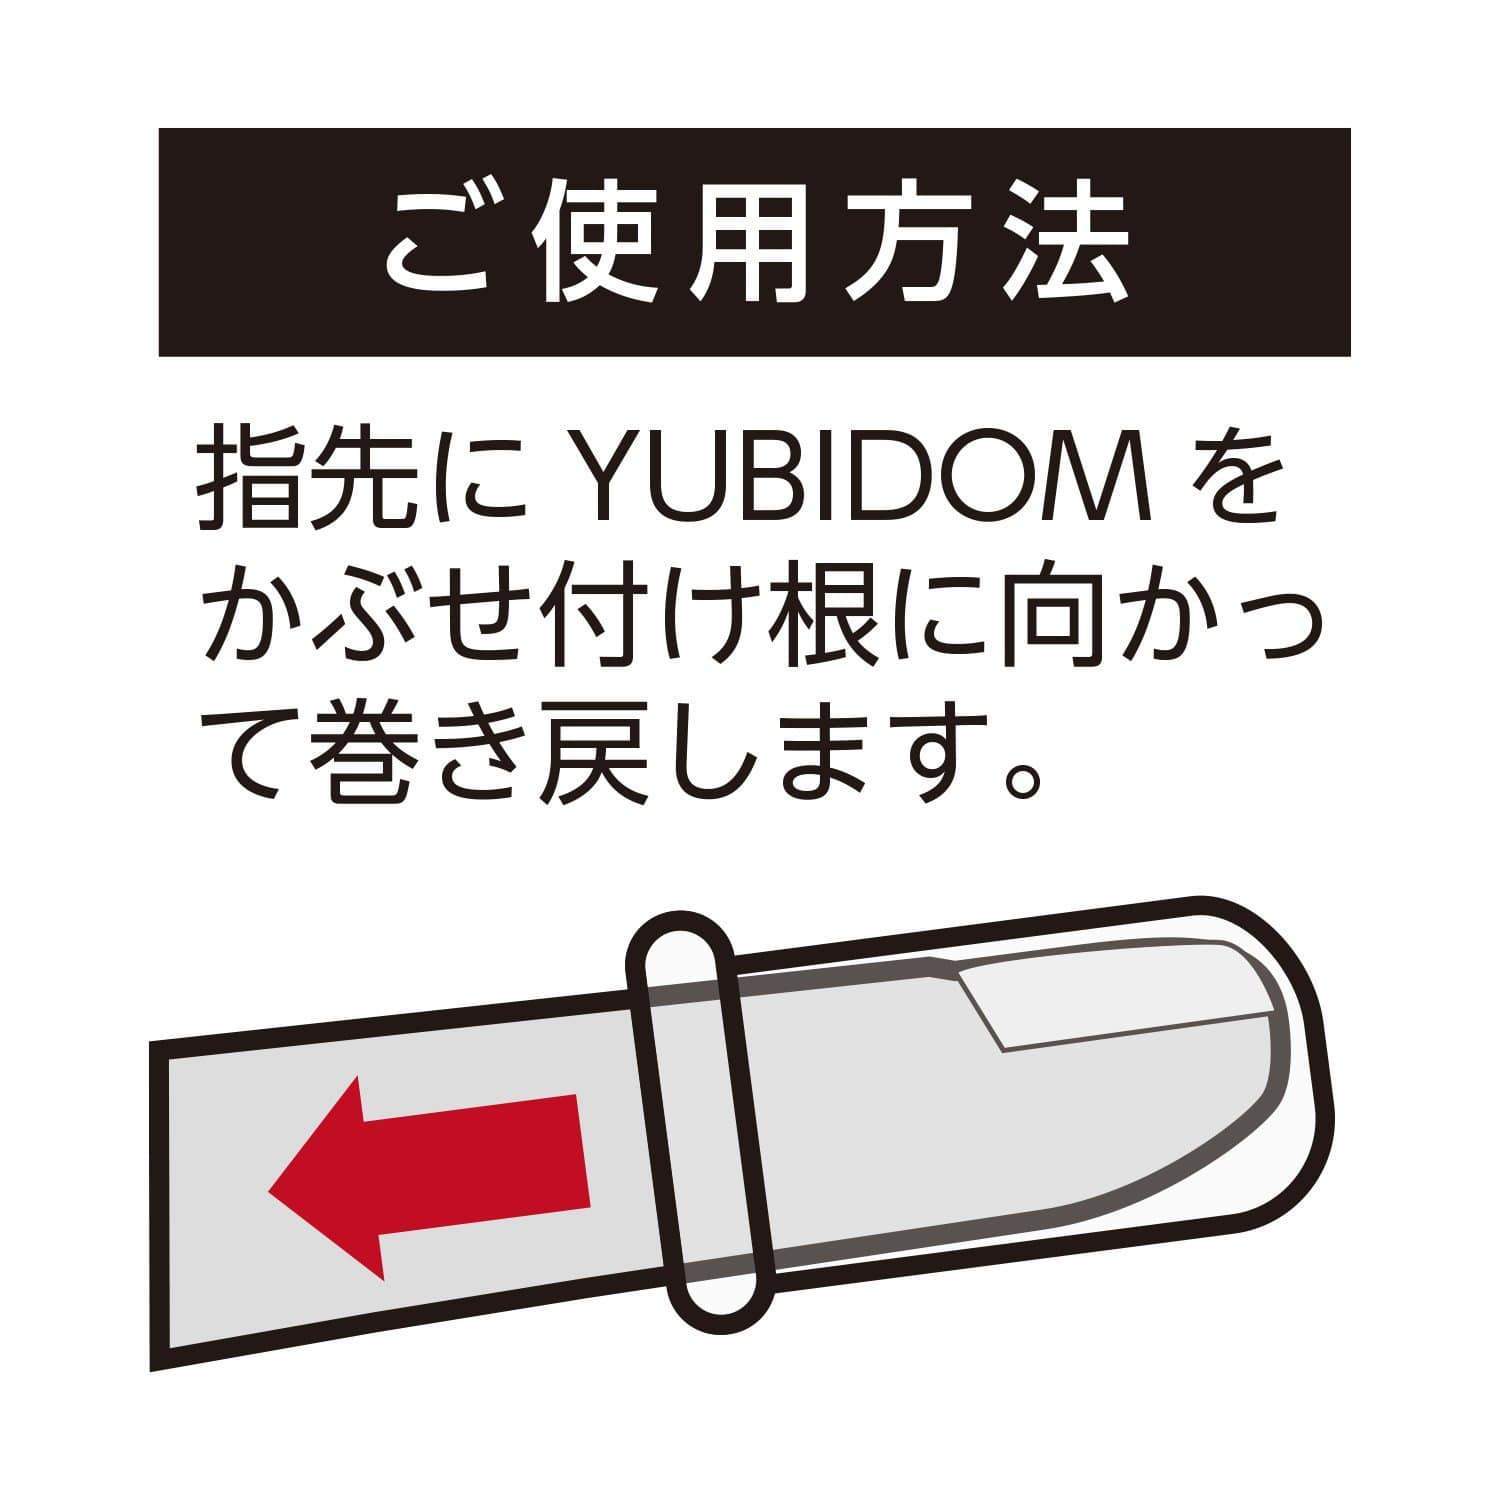 NPG - Yubidom Minami Aizawa Ver.02 Finger Sleeve 20 Pieces (Clear) Novelties (Non Vibration) 4580160829872 CherryAffairs